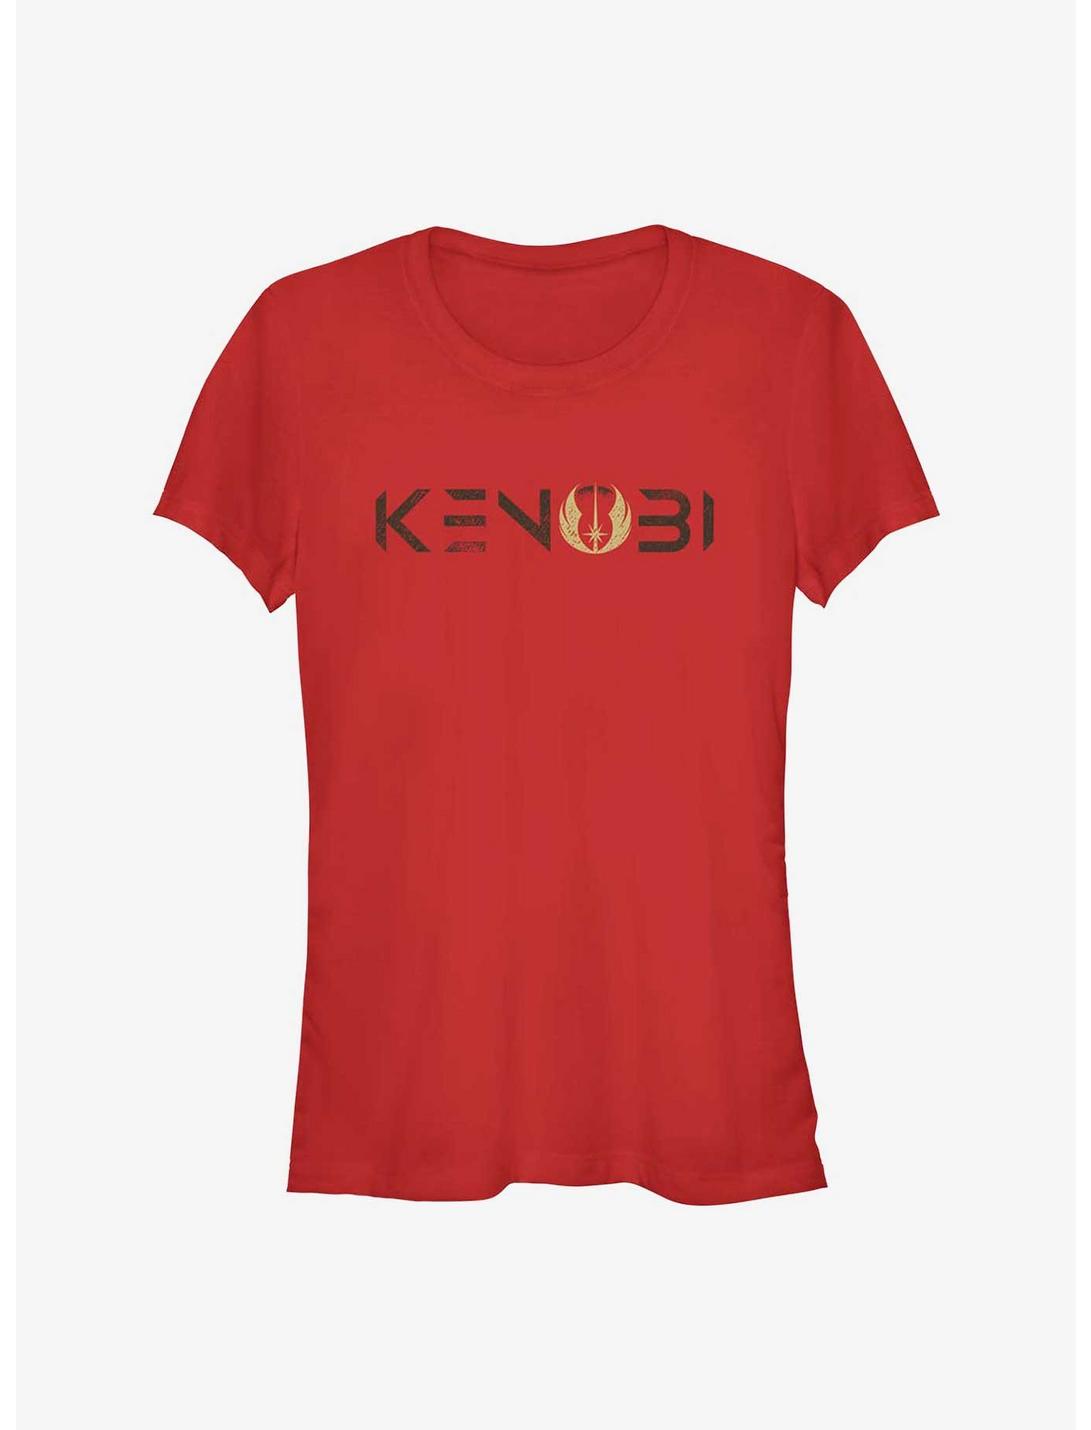 Star Wars Obi-Wan Kenobi Jedi Crest Logo Girls T-Shirt, RED, hi-res